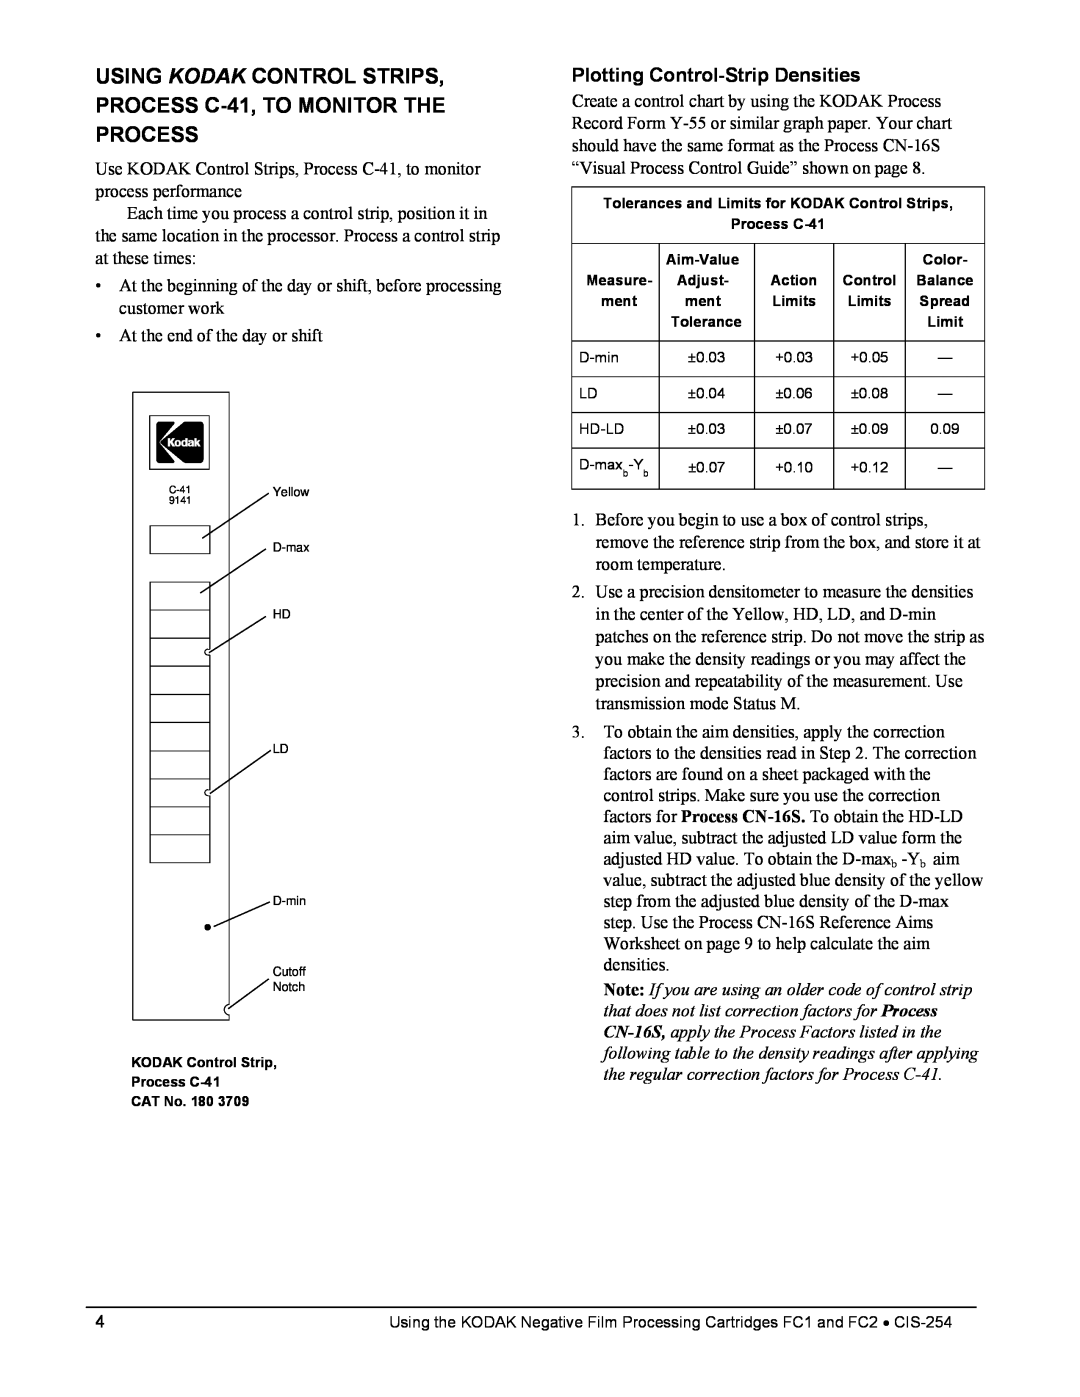 Kodak FC1, FC2 manual Plotting Control-StripDensities 